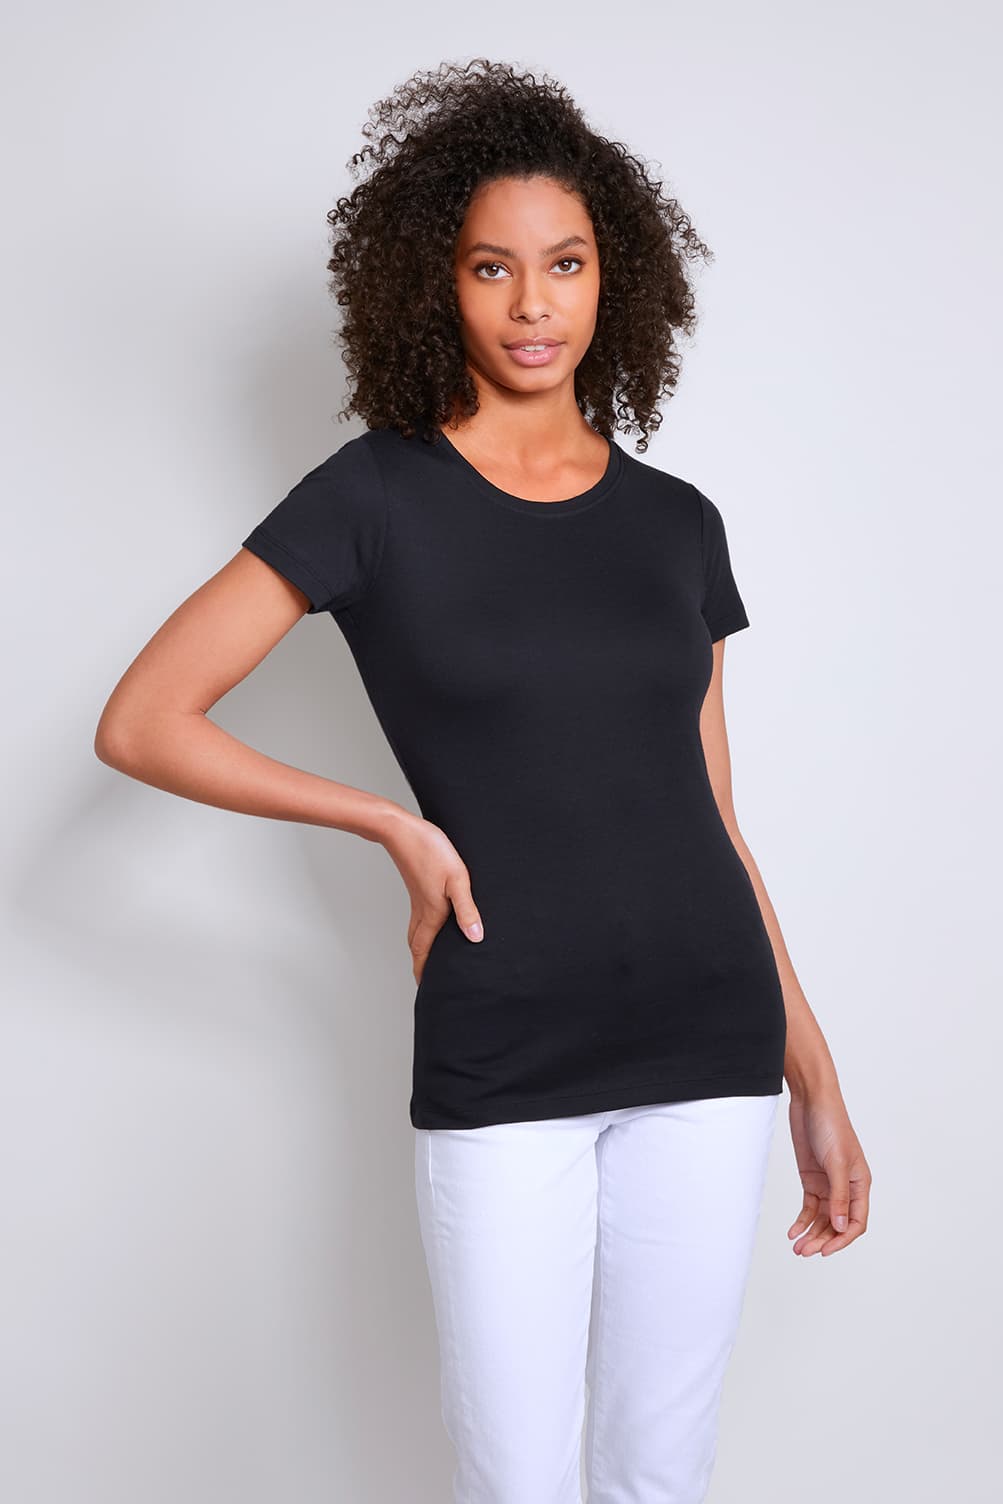 Women's Short Sleeve Crew Neck Cotton Modal Blend T-shirt Black - Core Essential T-shirt - Quality Short Sleeve T-shirt Lavender Hill Clothing